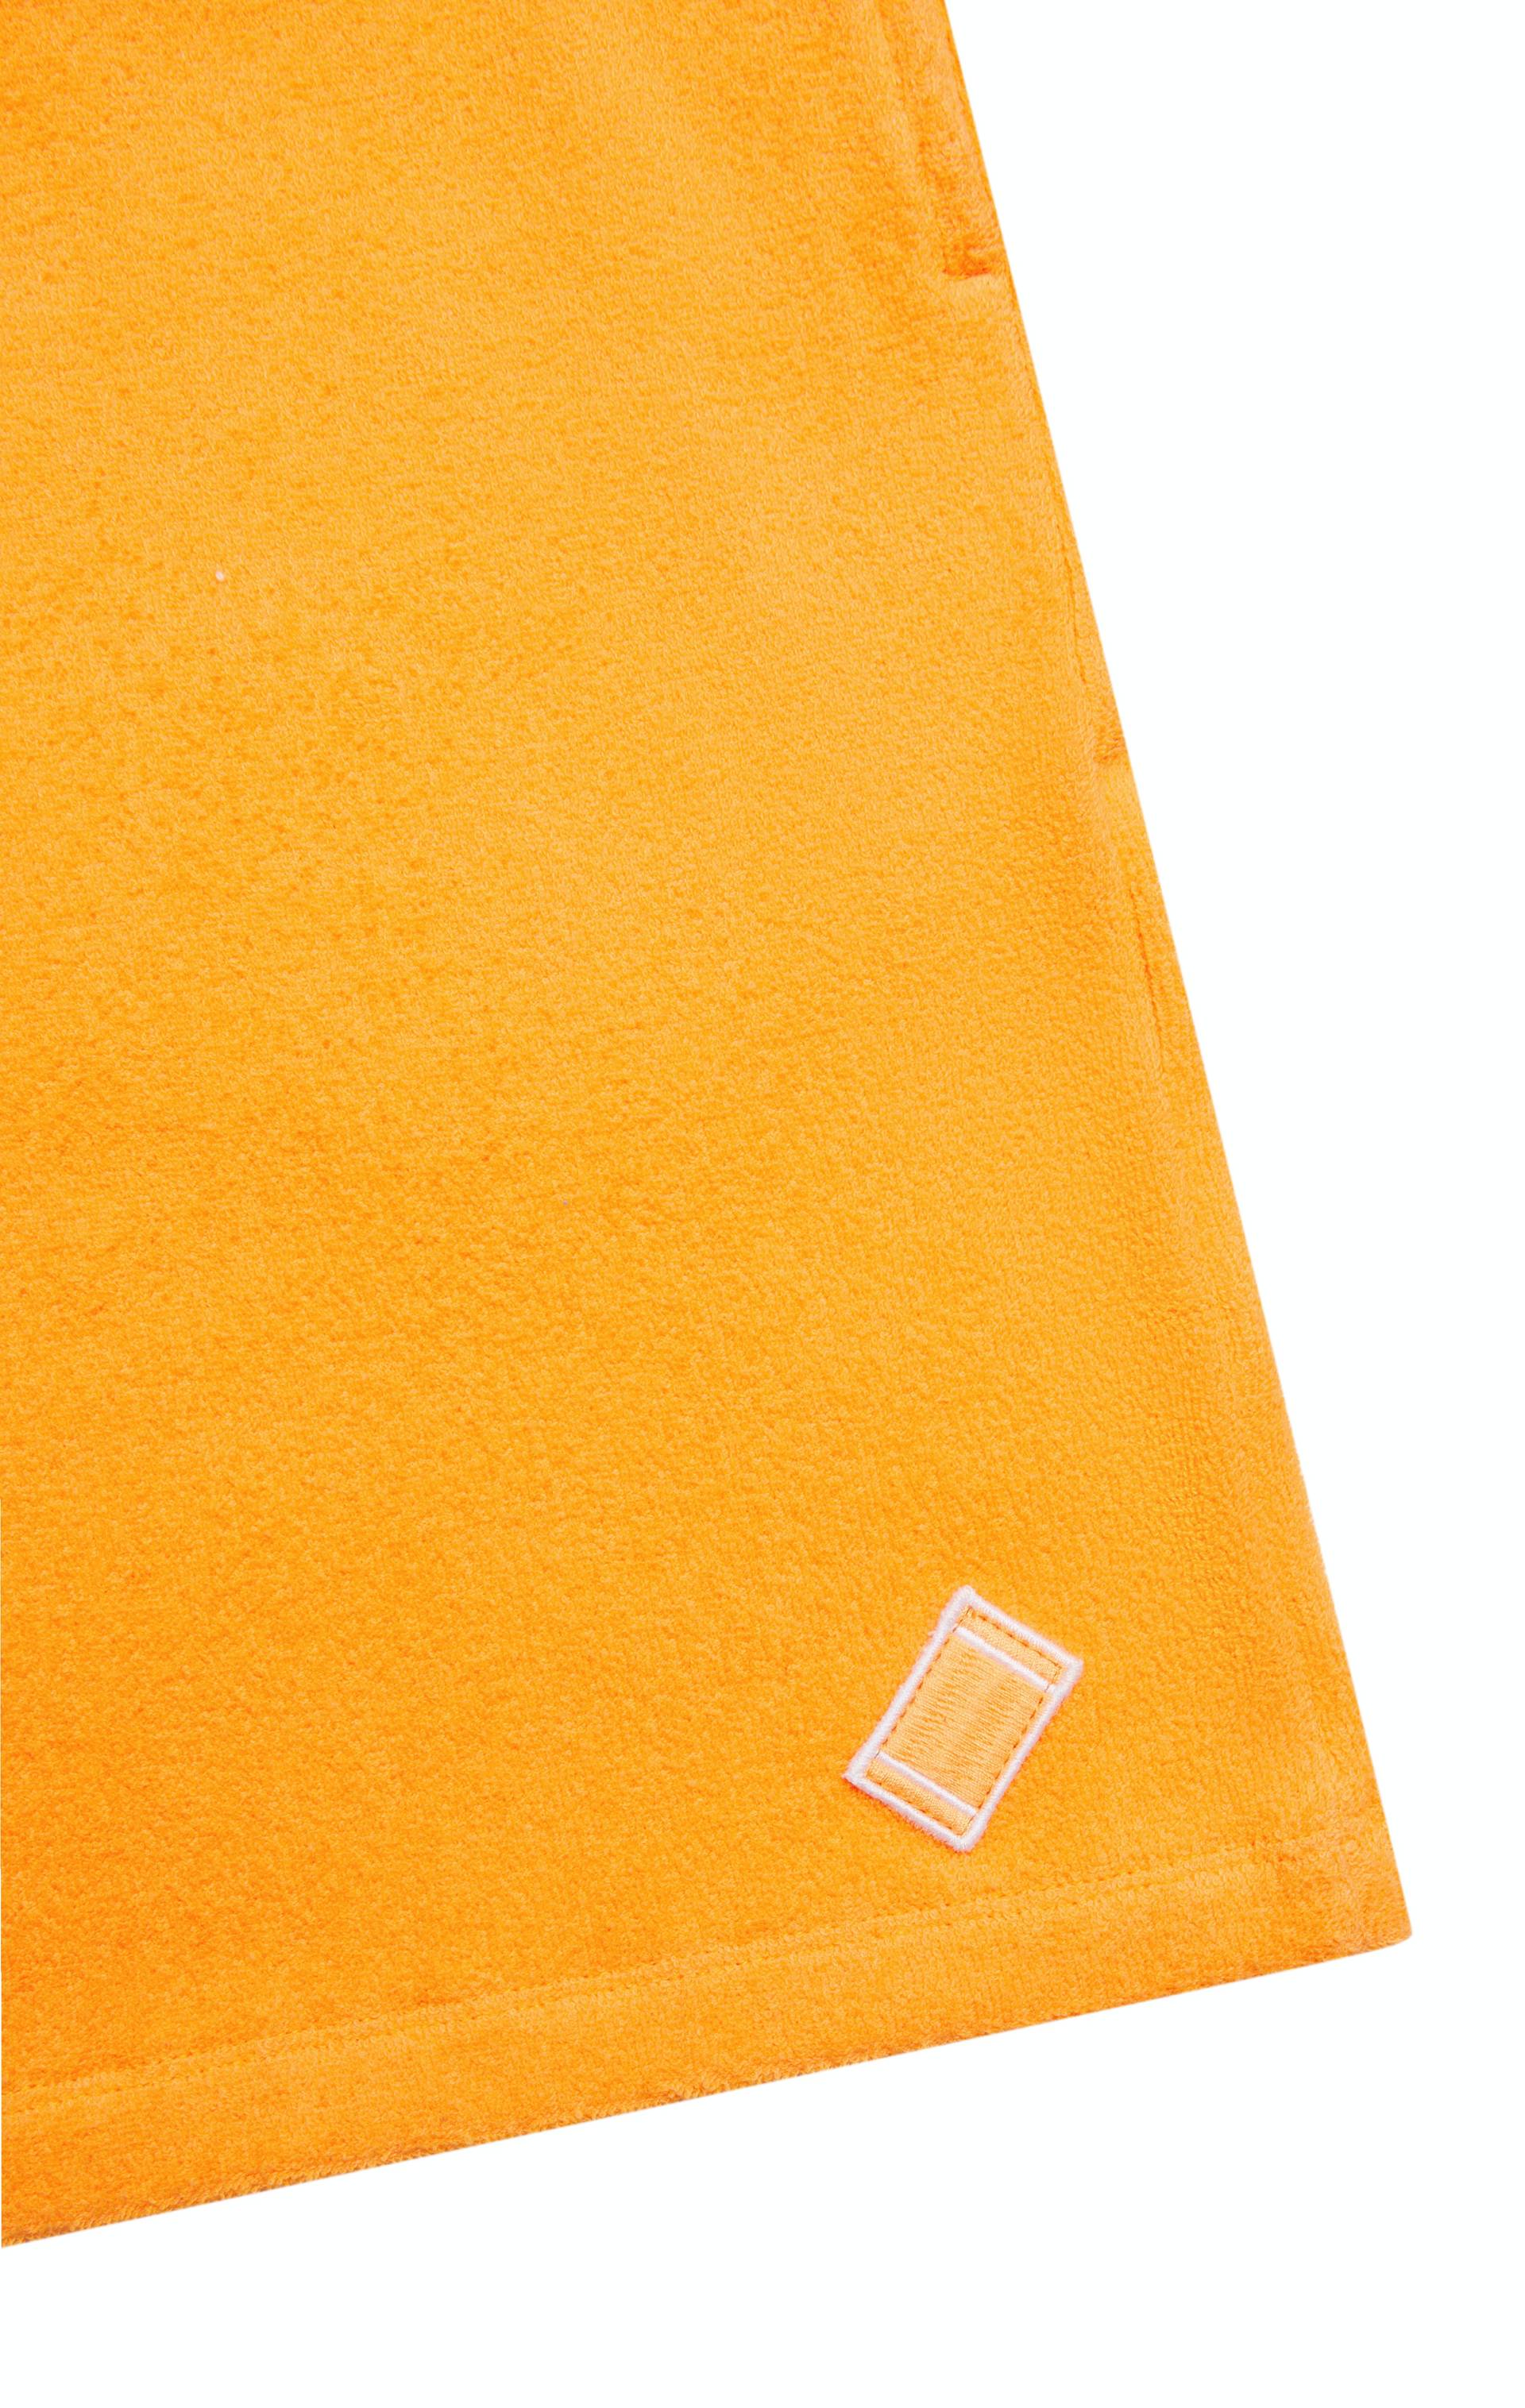 Onepiece Towel Club Shorts Orange - 4